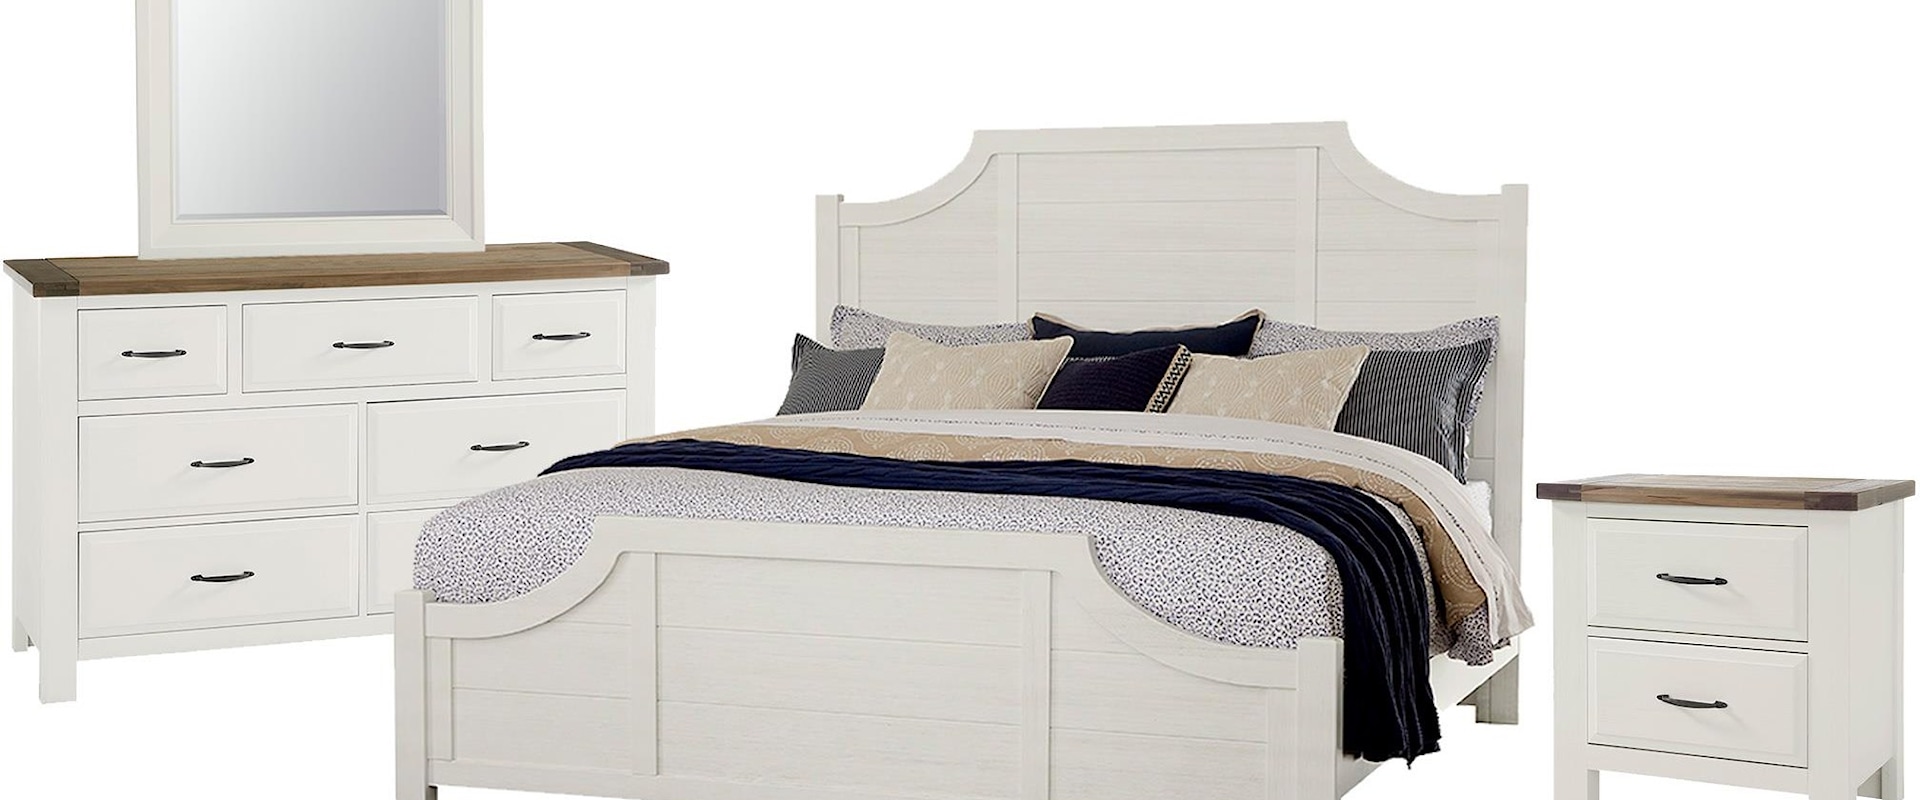 Queen Scallop Bed, 7 Drawer Dresser, Landscape Mirror, and 2 Drawer Nightstand